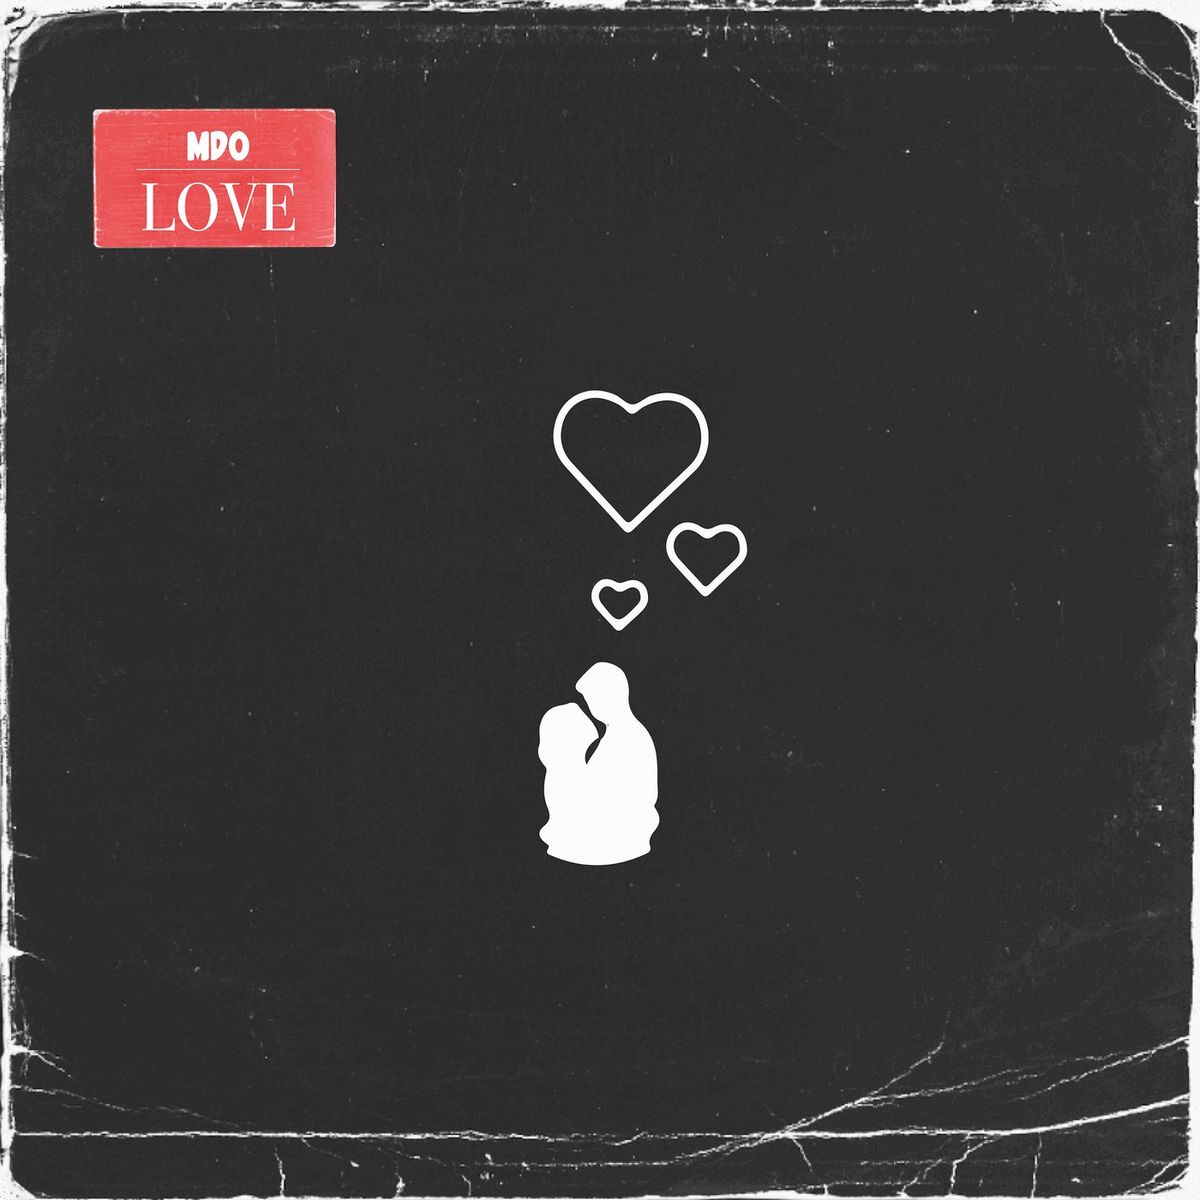 MDO (Menino de Ouro) – Love EP